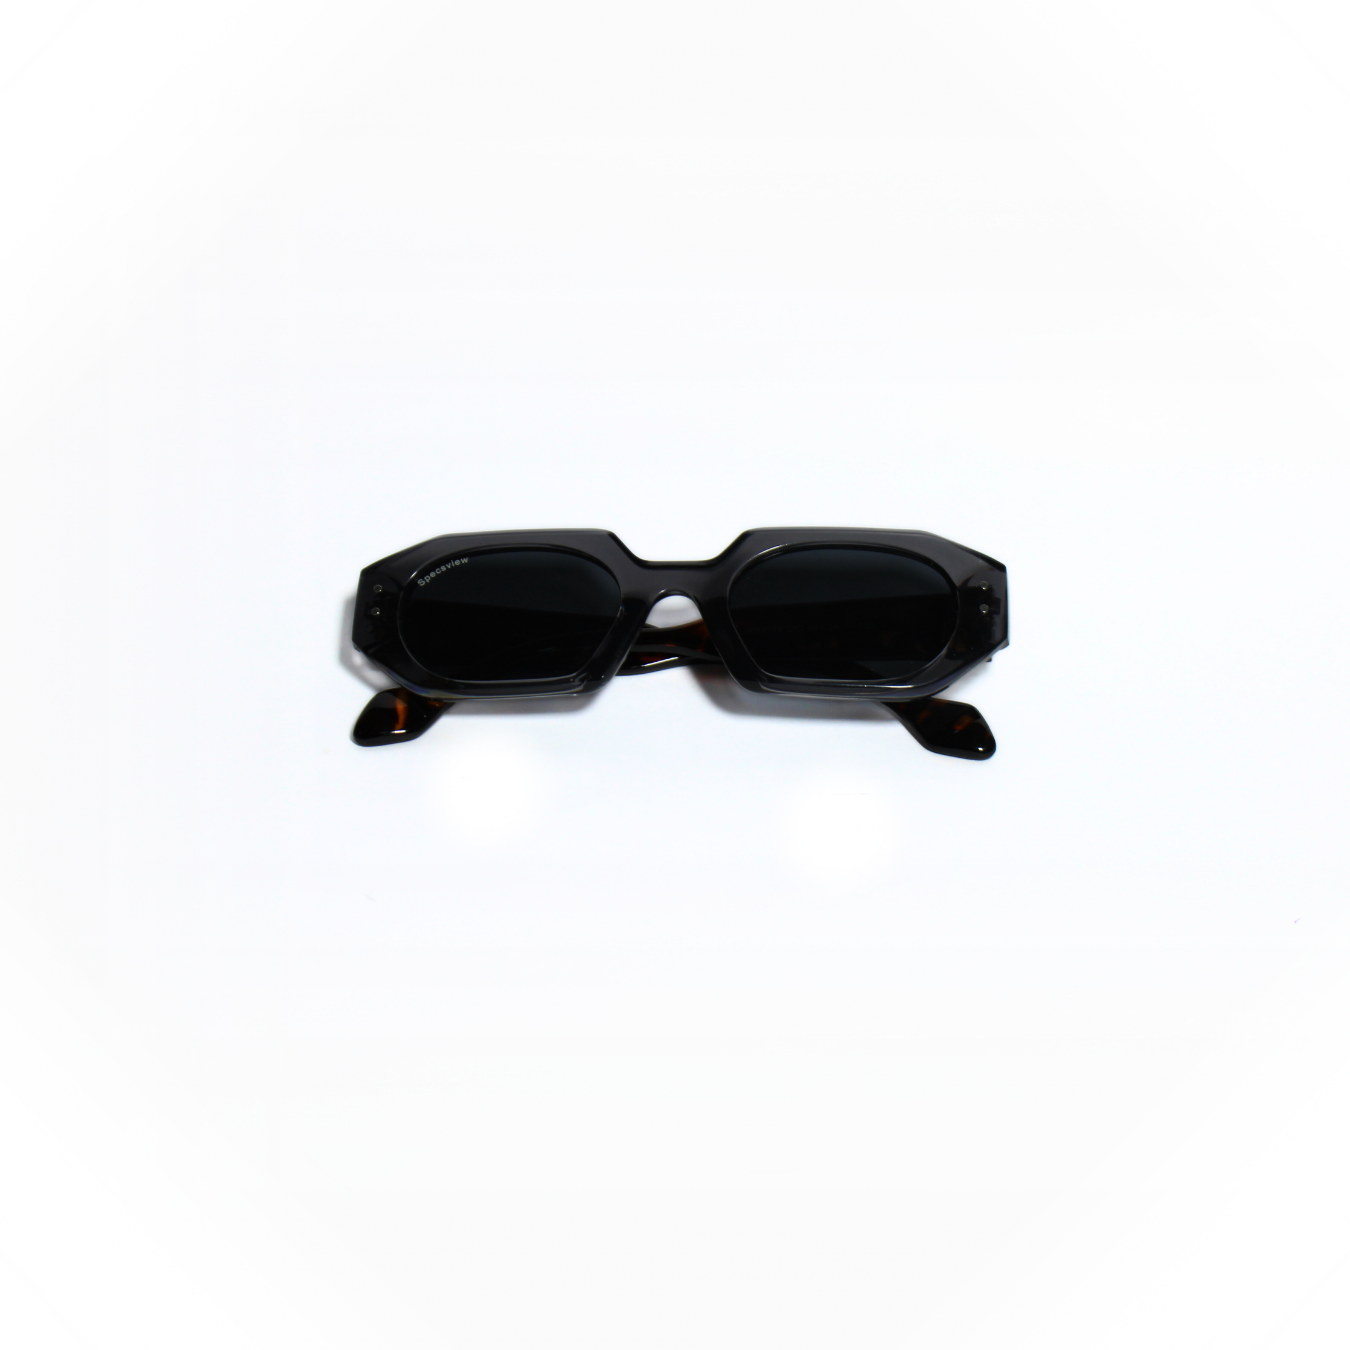 NOAH 004 I Sunglasses for Men and Women - Specsview